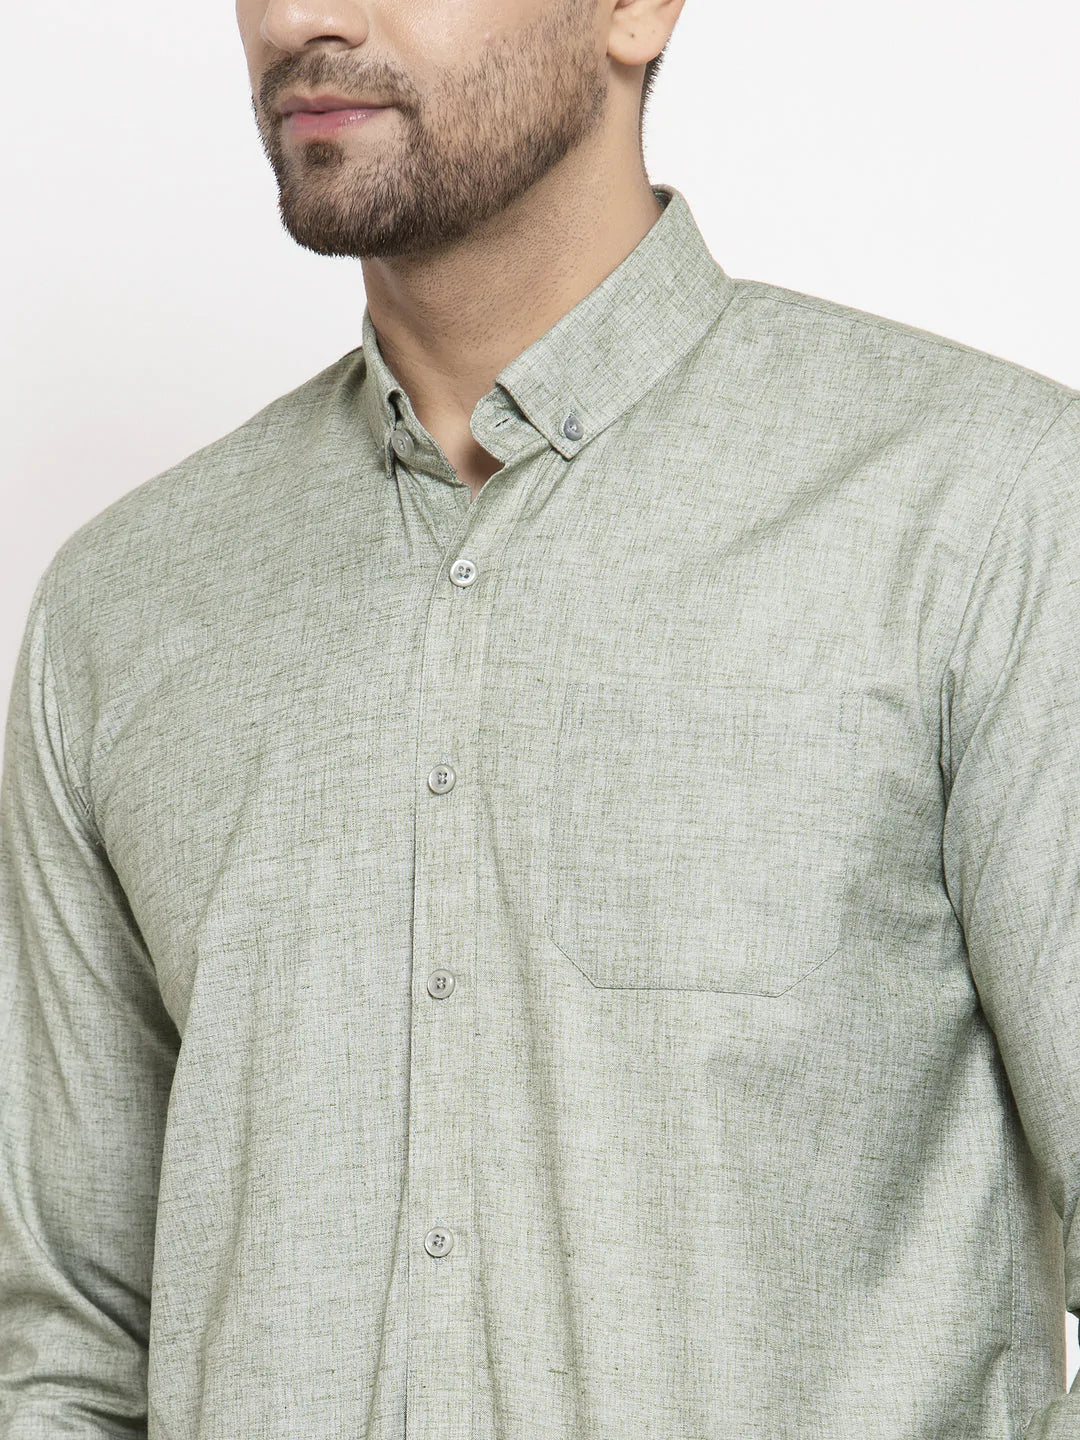 Jainish Green Men's Cotton Solid Button Down Formal Shirts ( SF 753Pista )